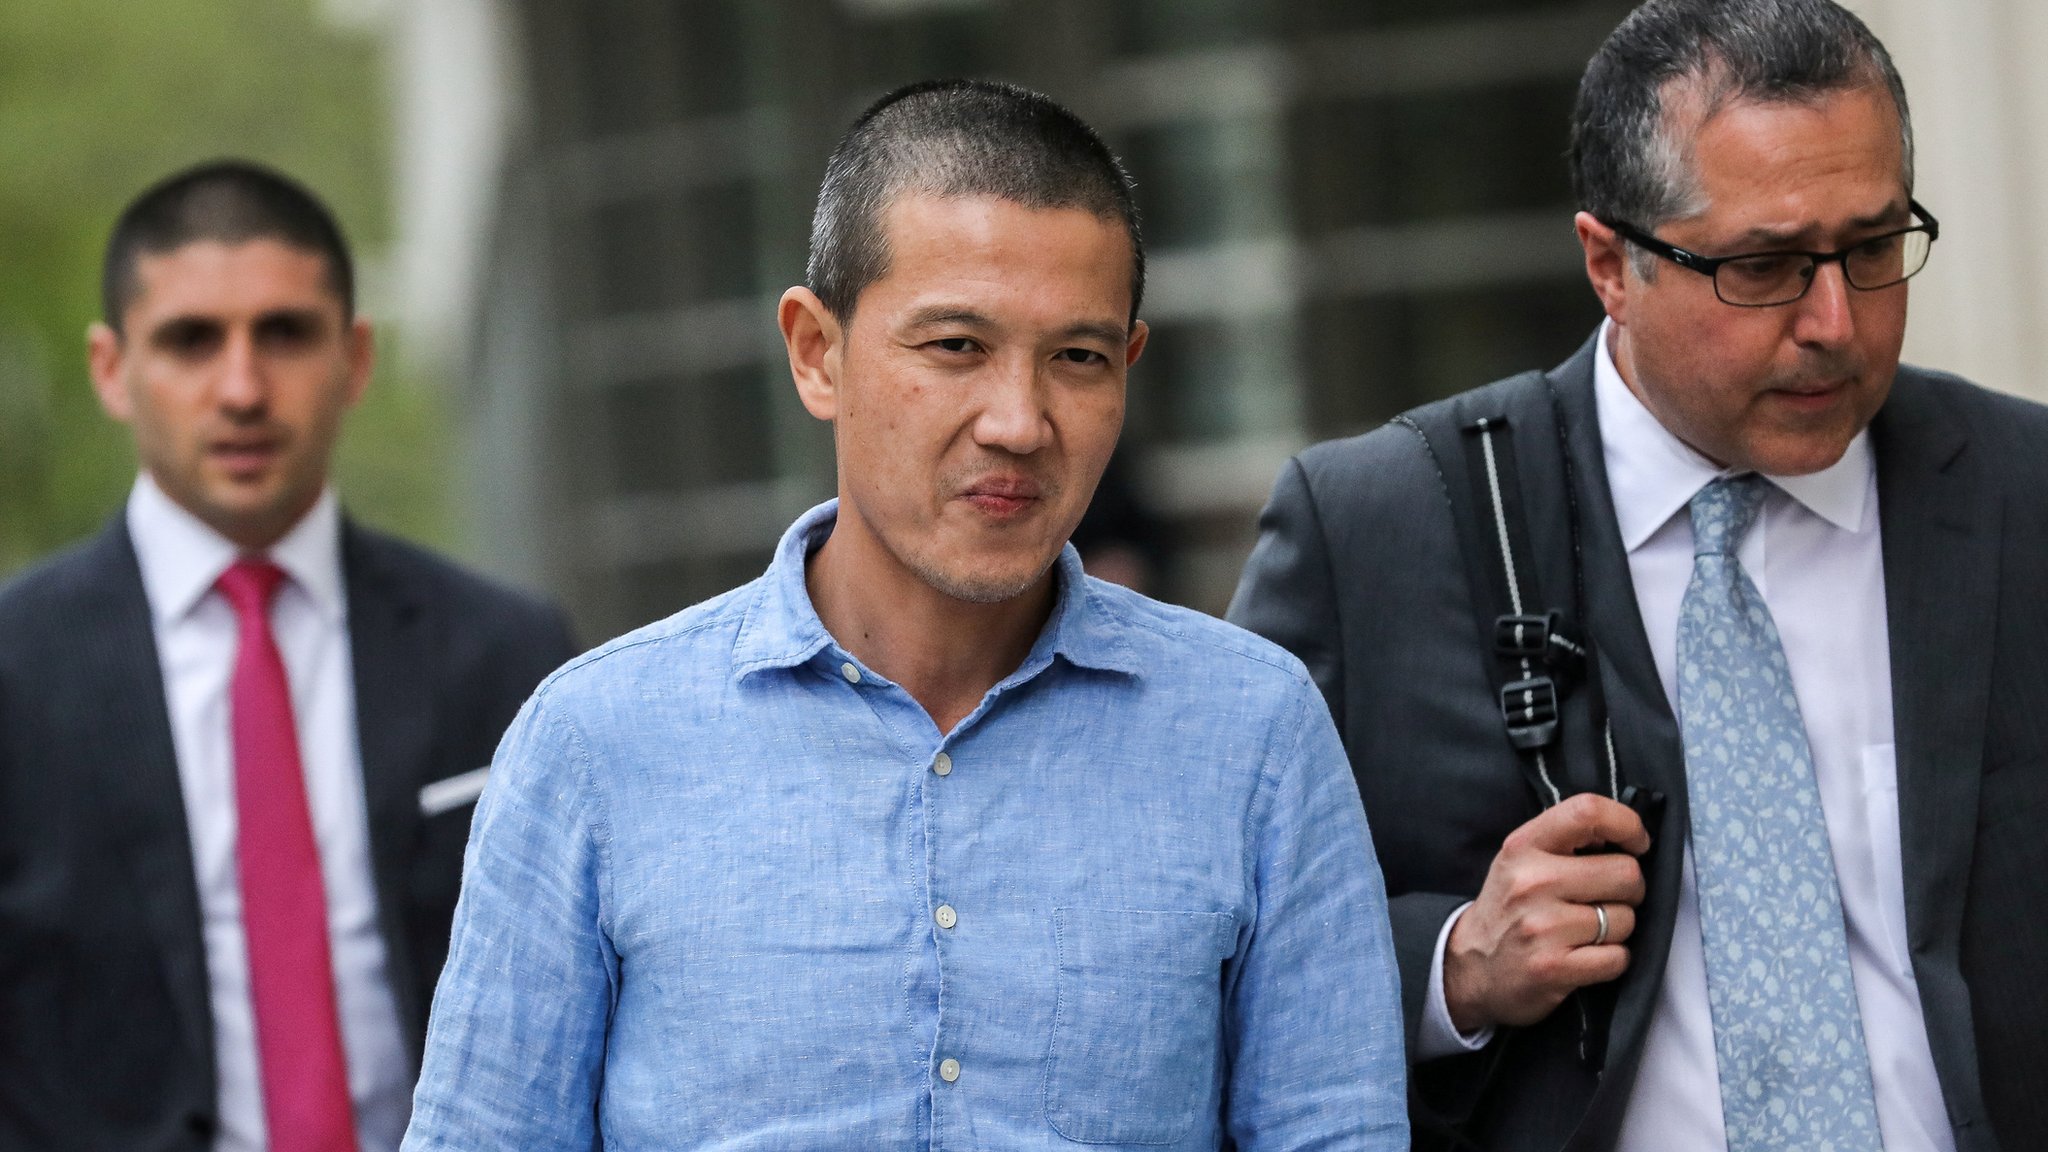 1MDB scandal Ex-Goldman Malaysia boss found guilty